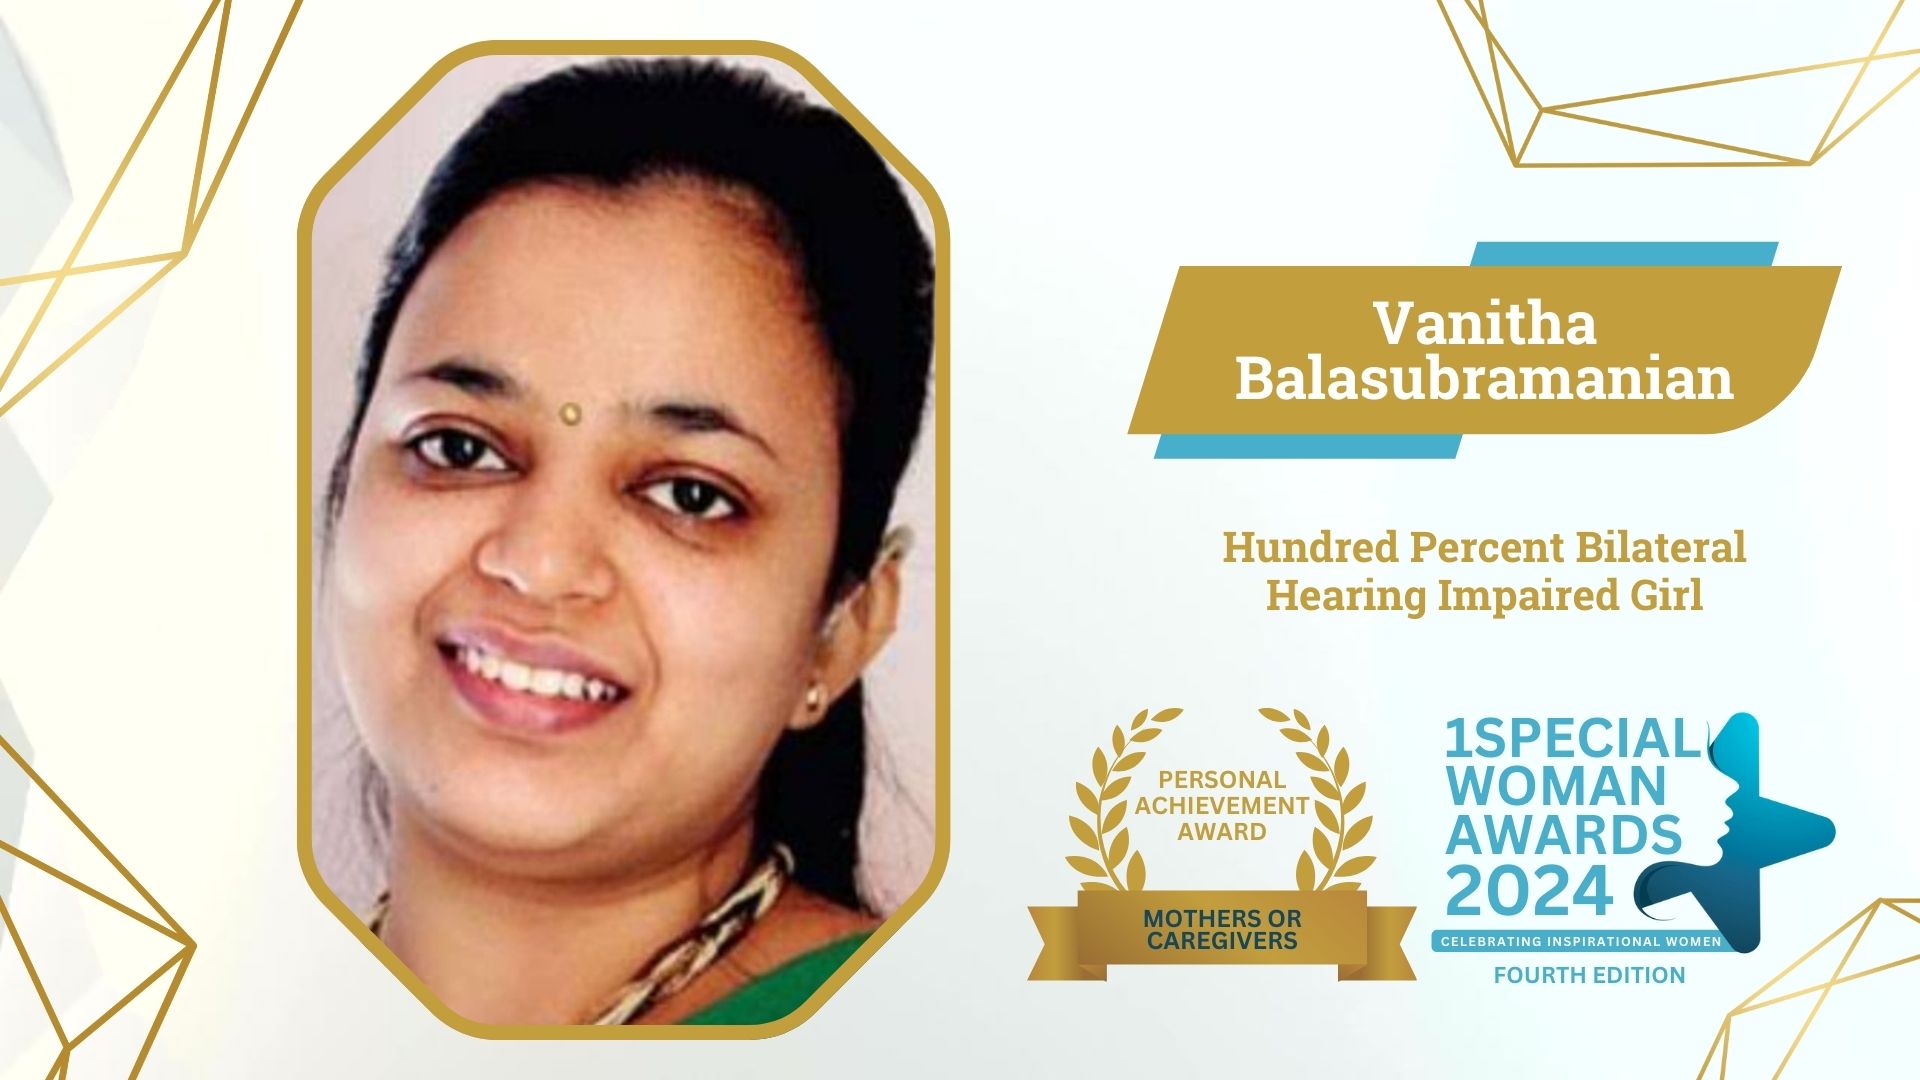 One special award 2024 winner Vanita Balasubramaniyam at 1special place